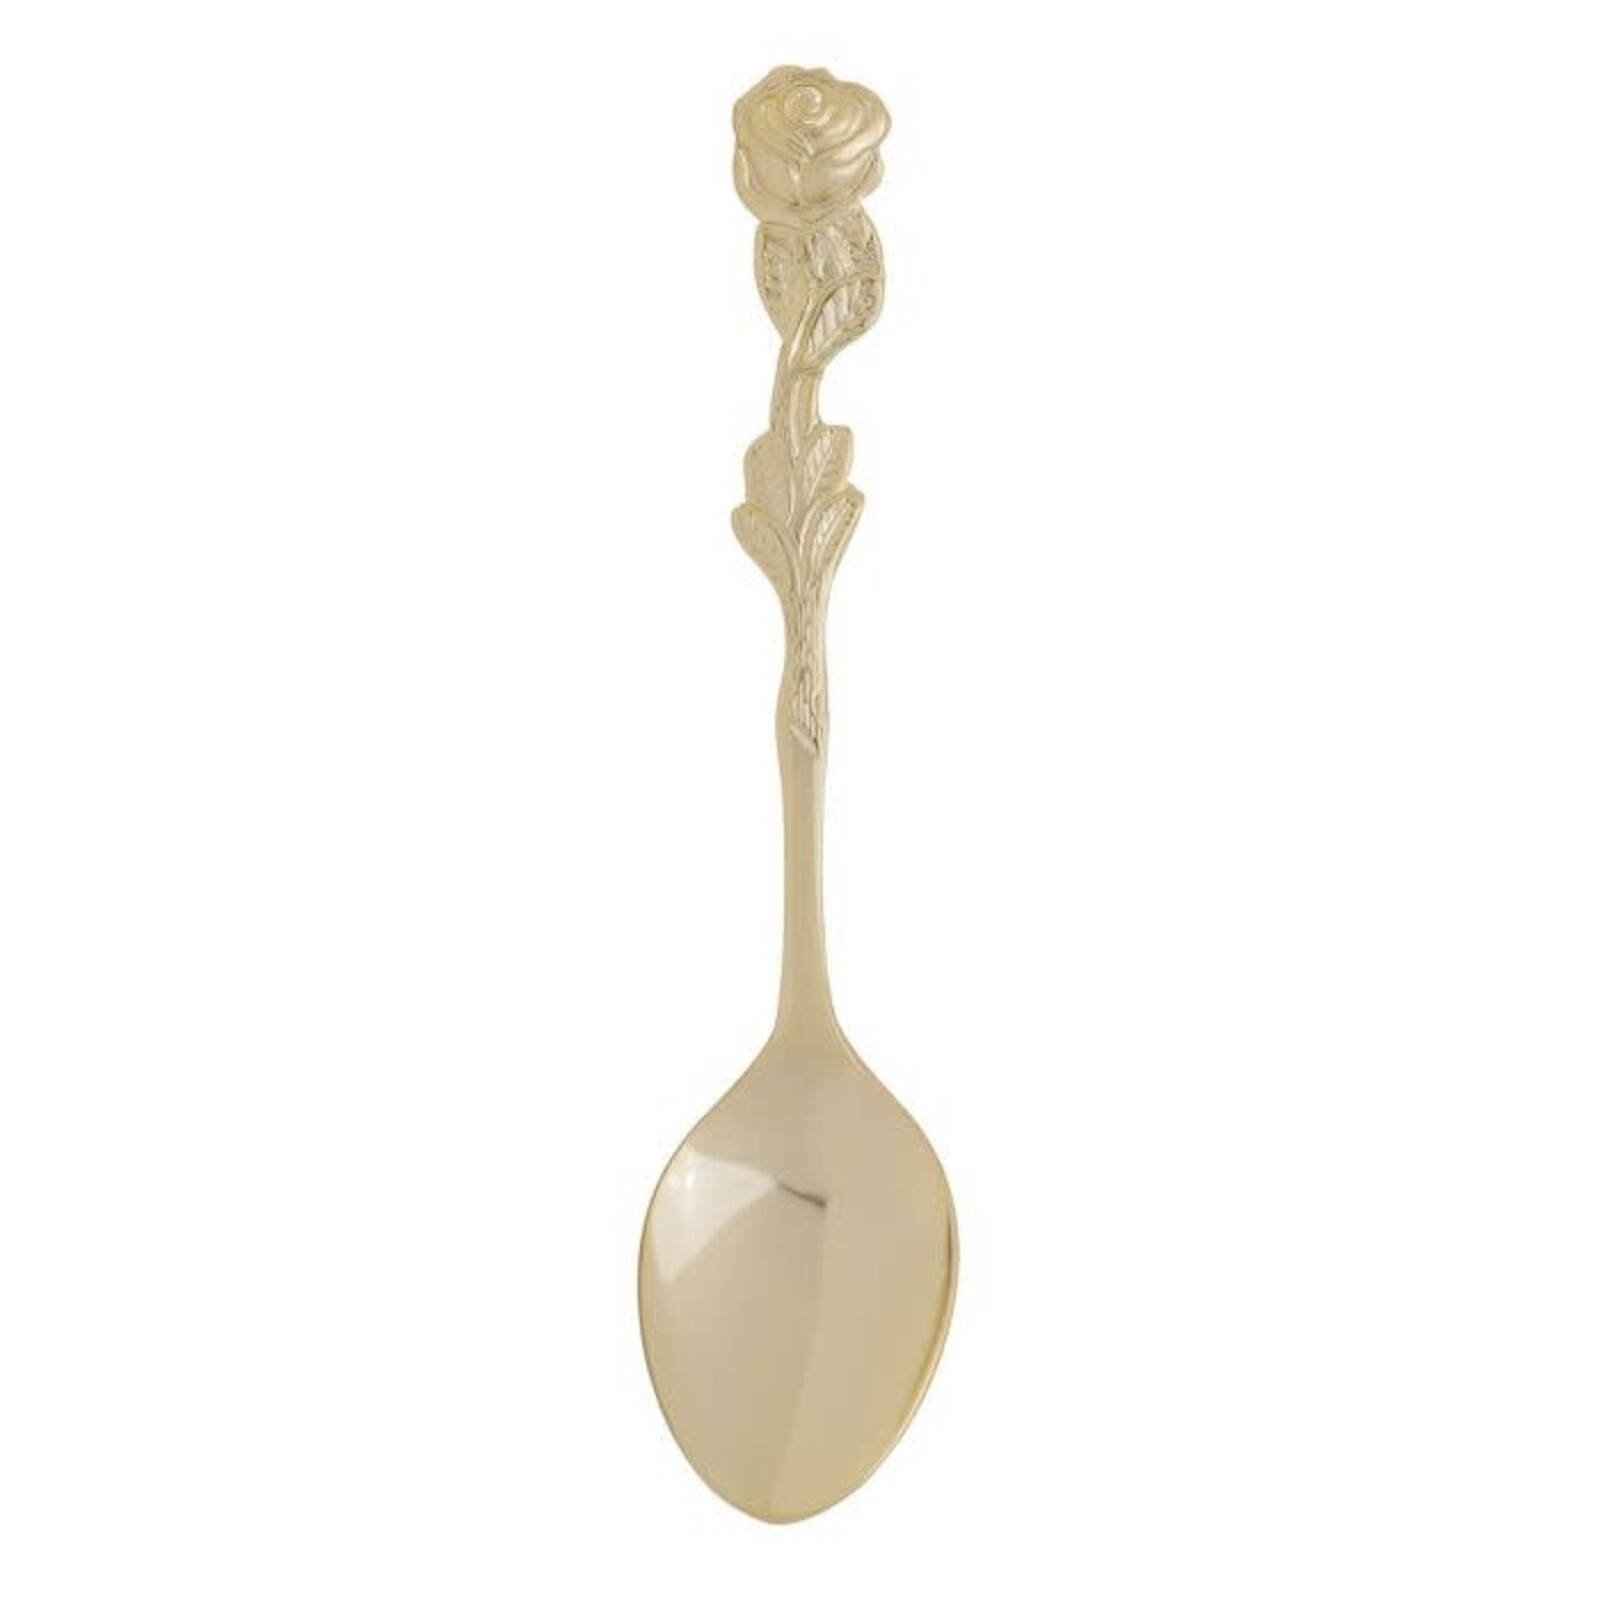 Harold Import Company Fino Demi Spoon, Rose Design Gold Plated GD-9 loading=